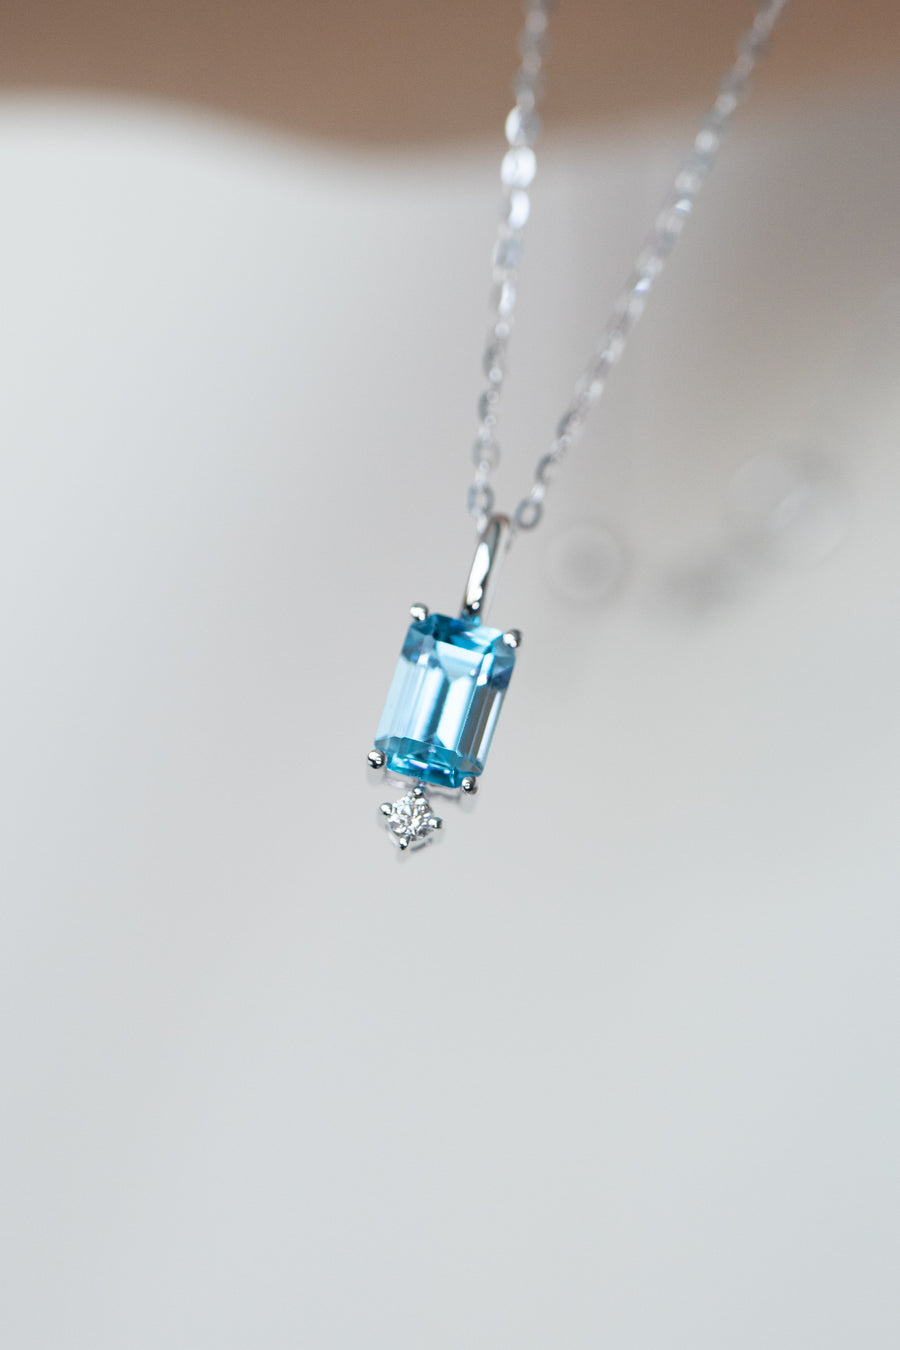 Lightly Swiss Blue ~0.70carat Emerald Cut Topaz and 0.02carat diamond 18K White Gold Necklace